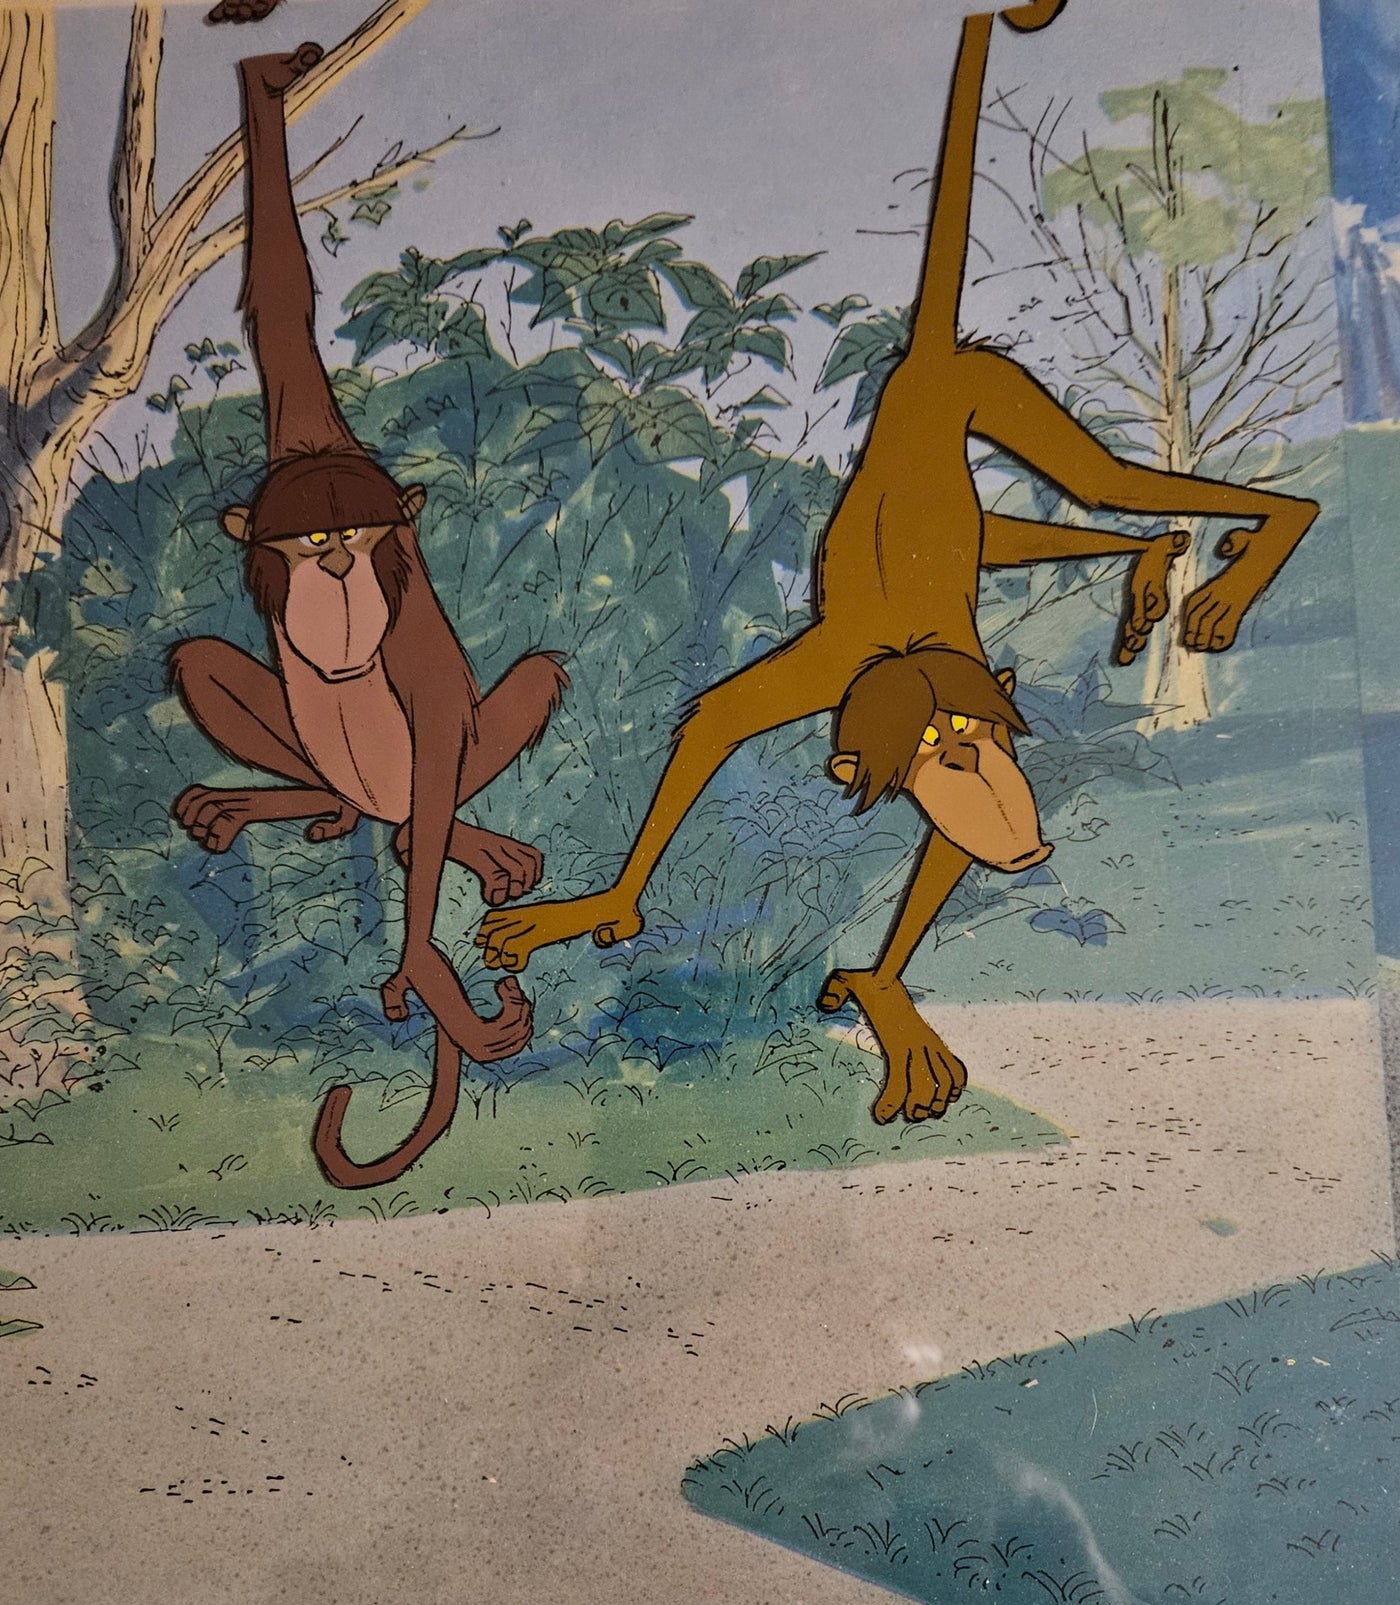 Original Walt Disney Production Cel from The Jungle Book featuring Monkeys